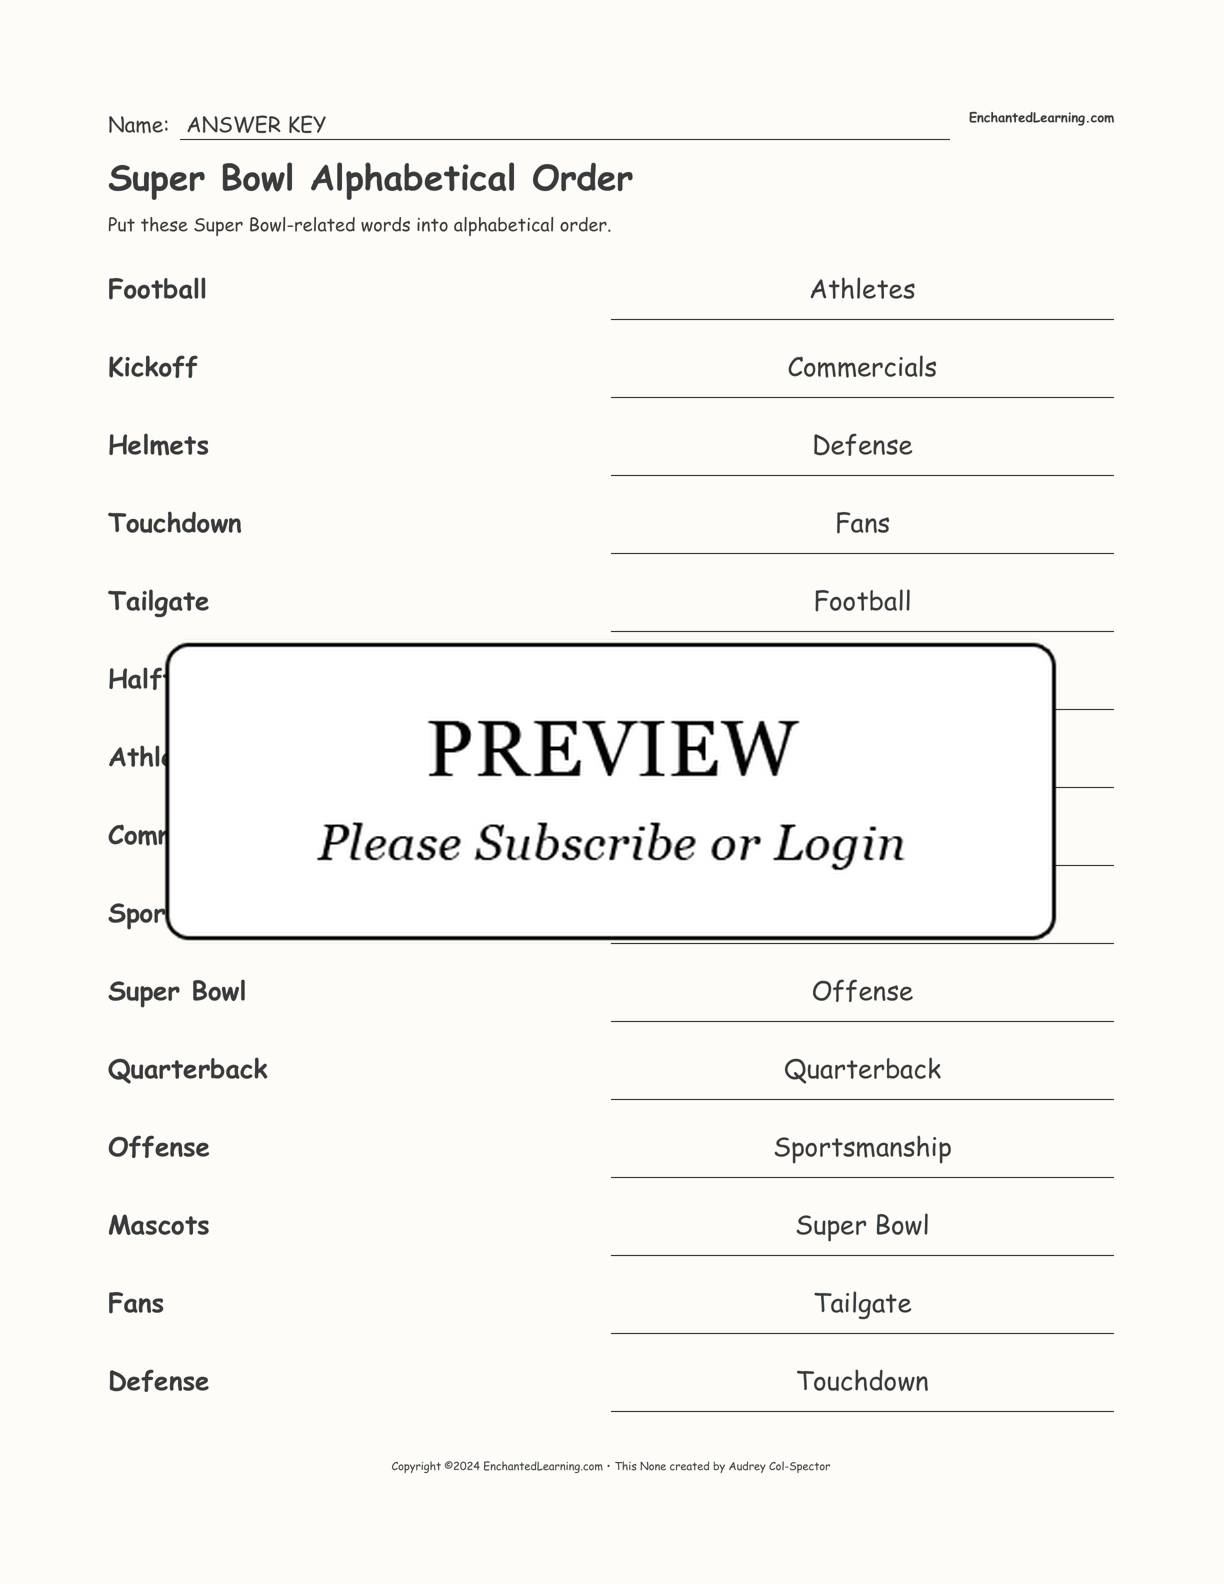 Super Bowl Alphabetical Order interactive worksheet page 2